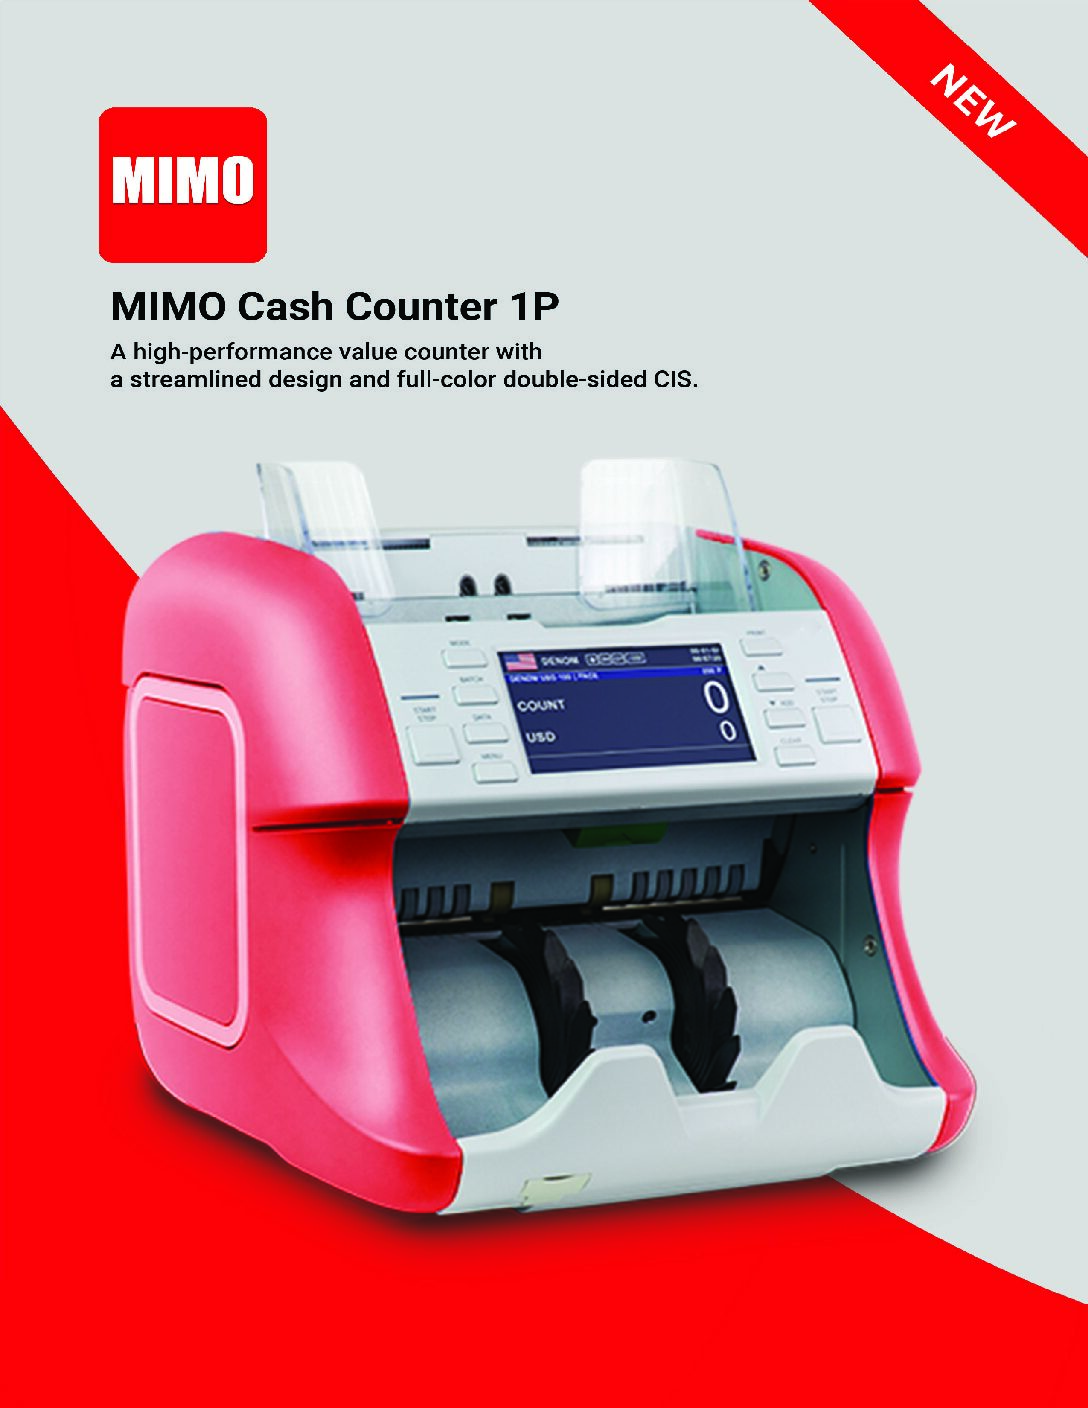 MIMO Cash Counter 1P